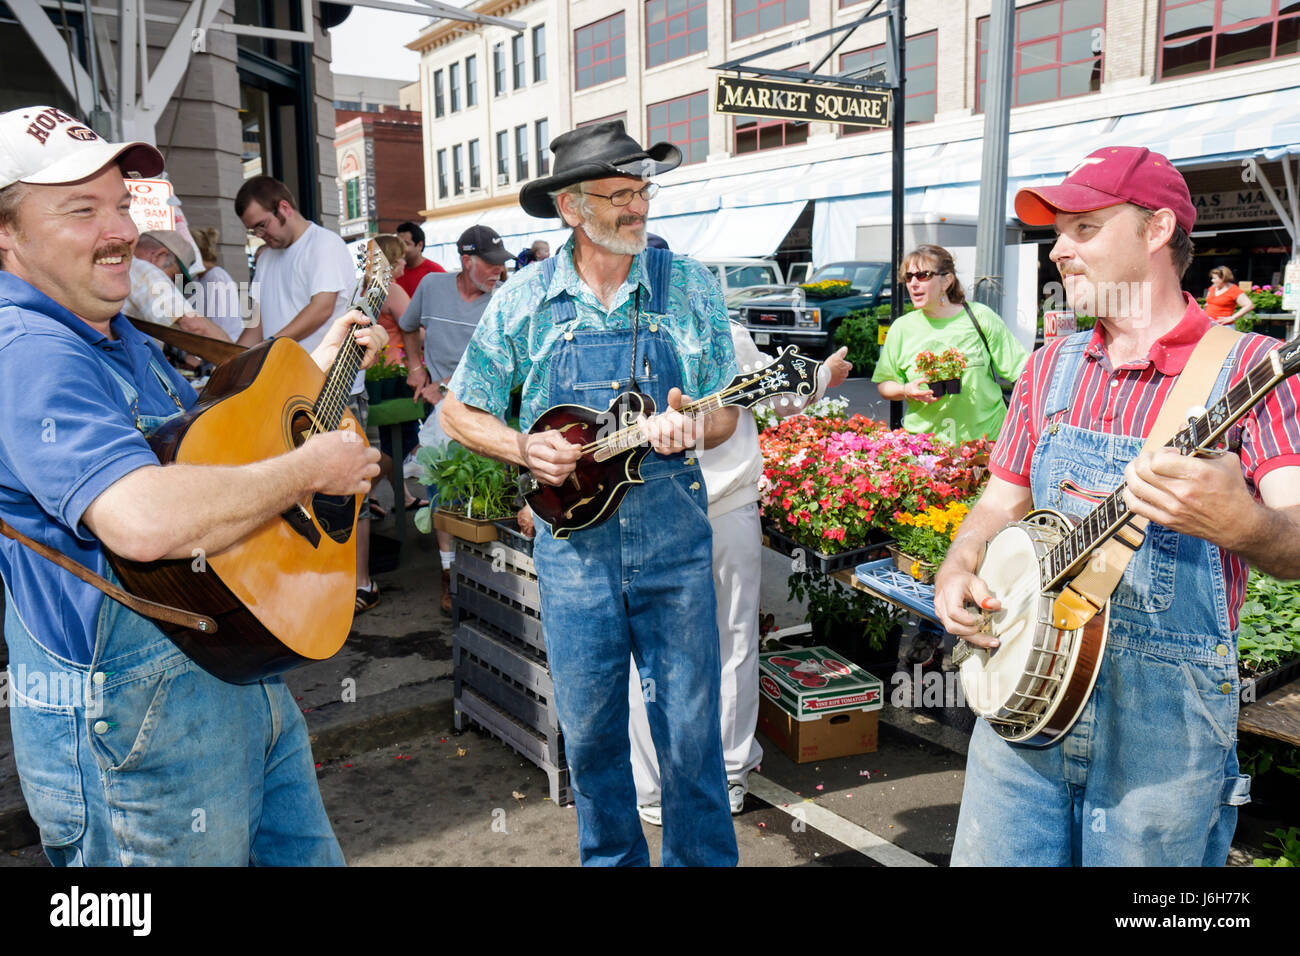 Roanoke Virginia, Market Square, Farmers' Market, Bluegrass, Musiker, Mann Männer Erwachsene Erwachsene, Männer, Gitarre, Banjo, Mandoline, Entertain, VA080503011 Stockfoto